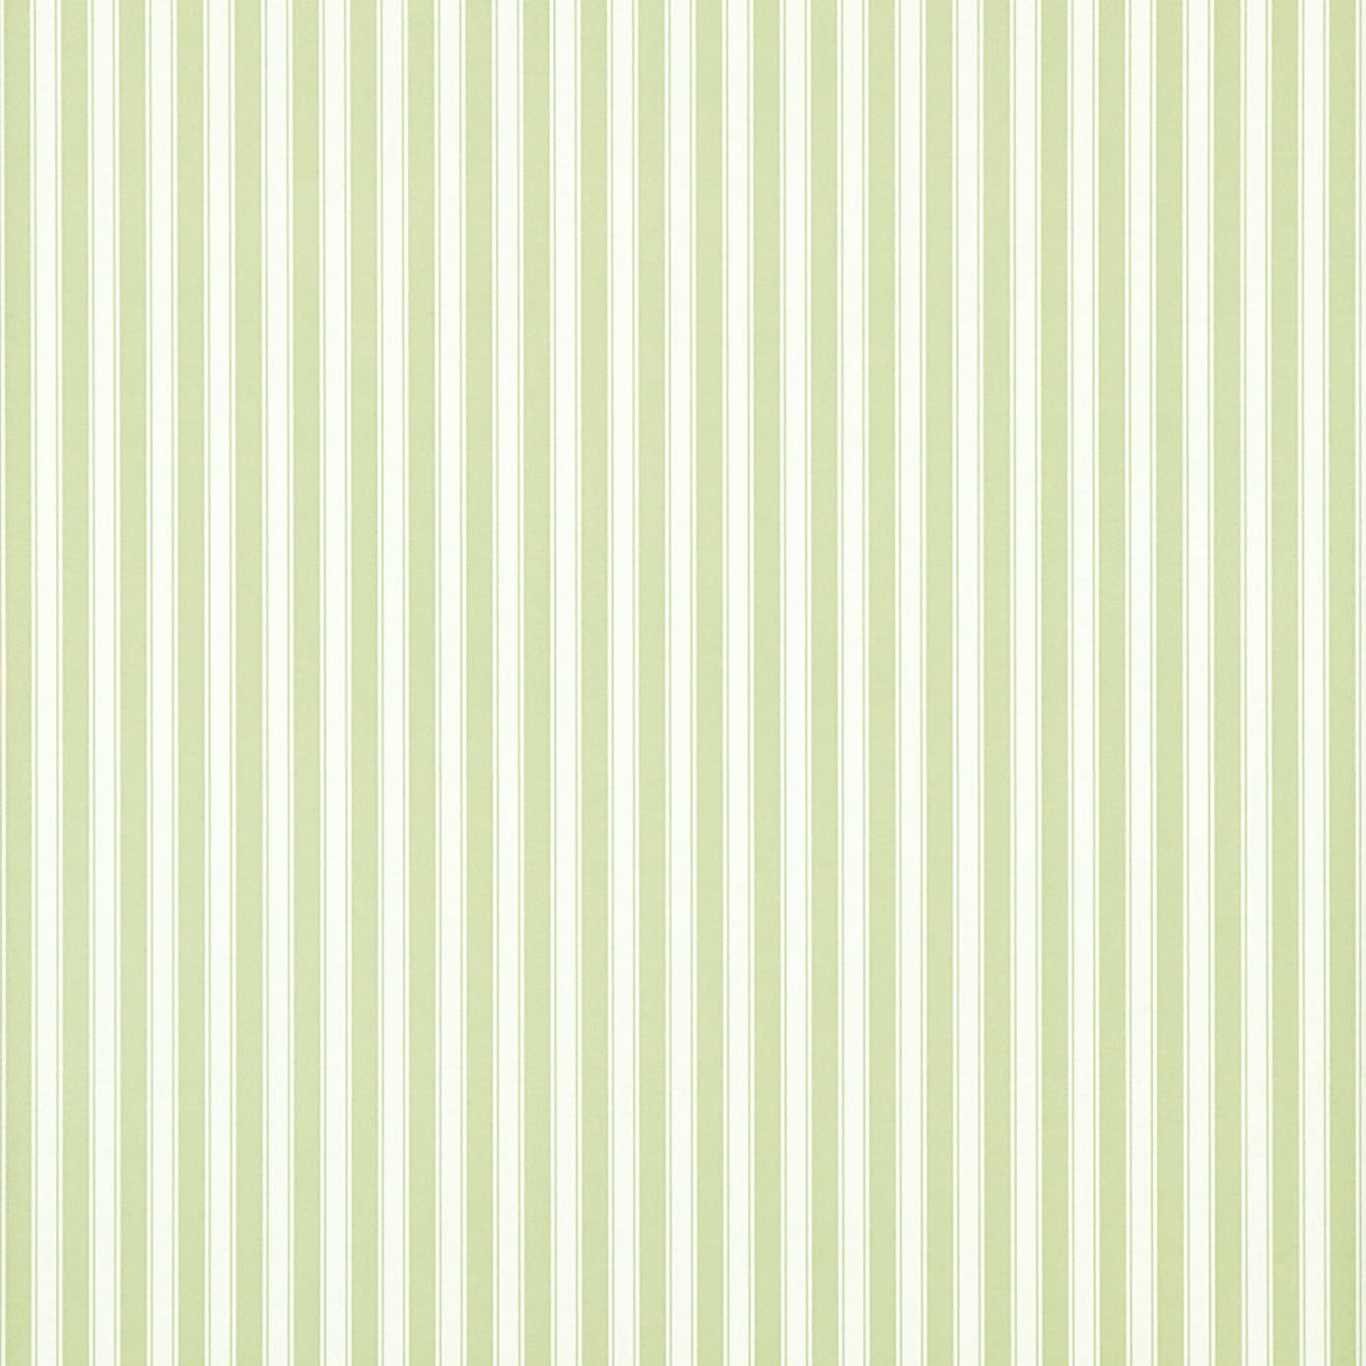 New Tiger Stripe Wallpaper - Leaf Green/Ivory - DCAVTP103 - Sanderson - One Sixty - Morris Wallpaper